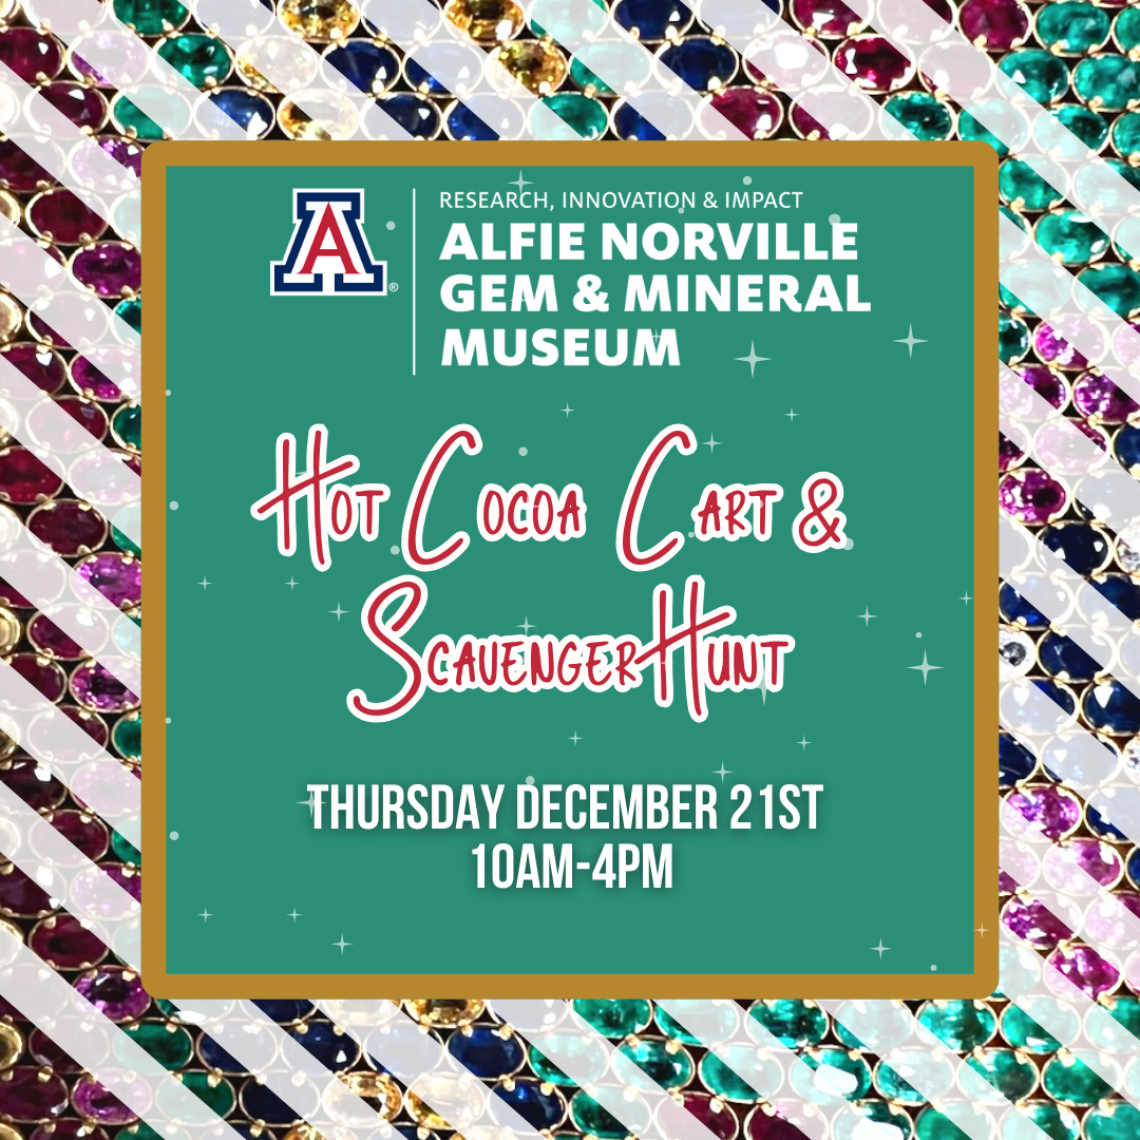 Event Announcement: Hot Cocoa Cart & Scavenger Hunt Thursday December 21st 10am-4pm Adults $5, children are free!